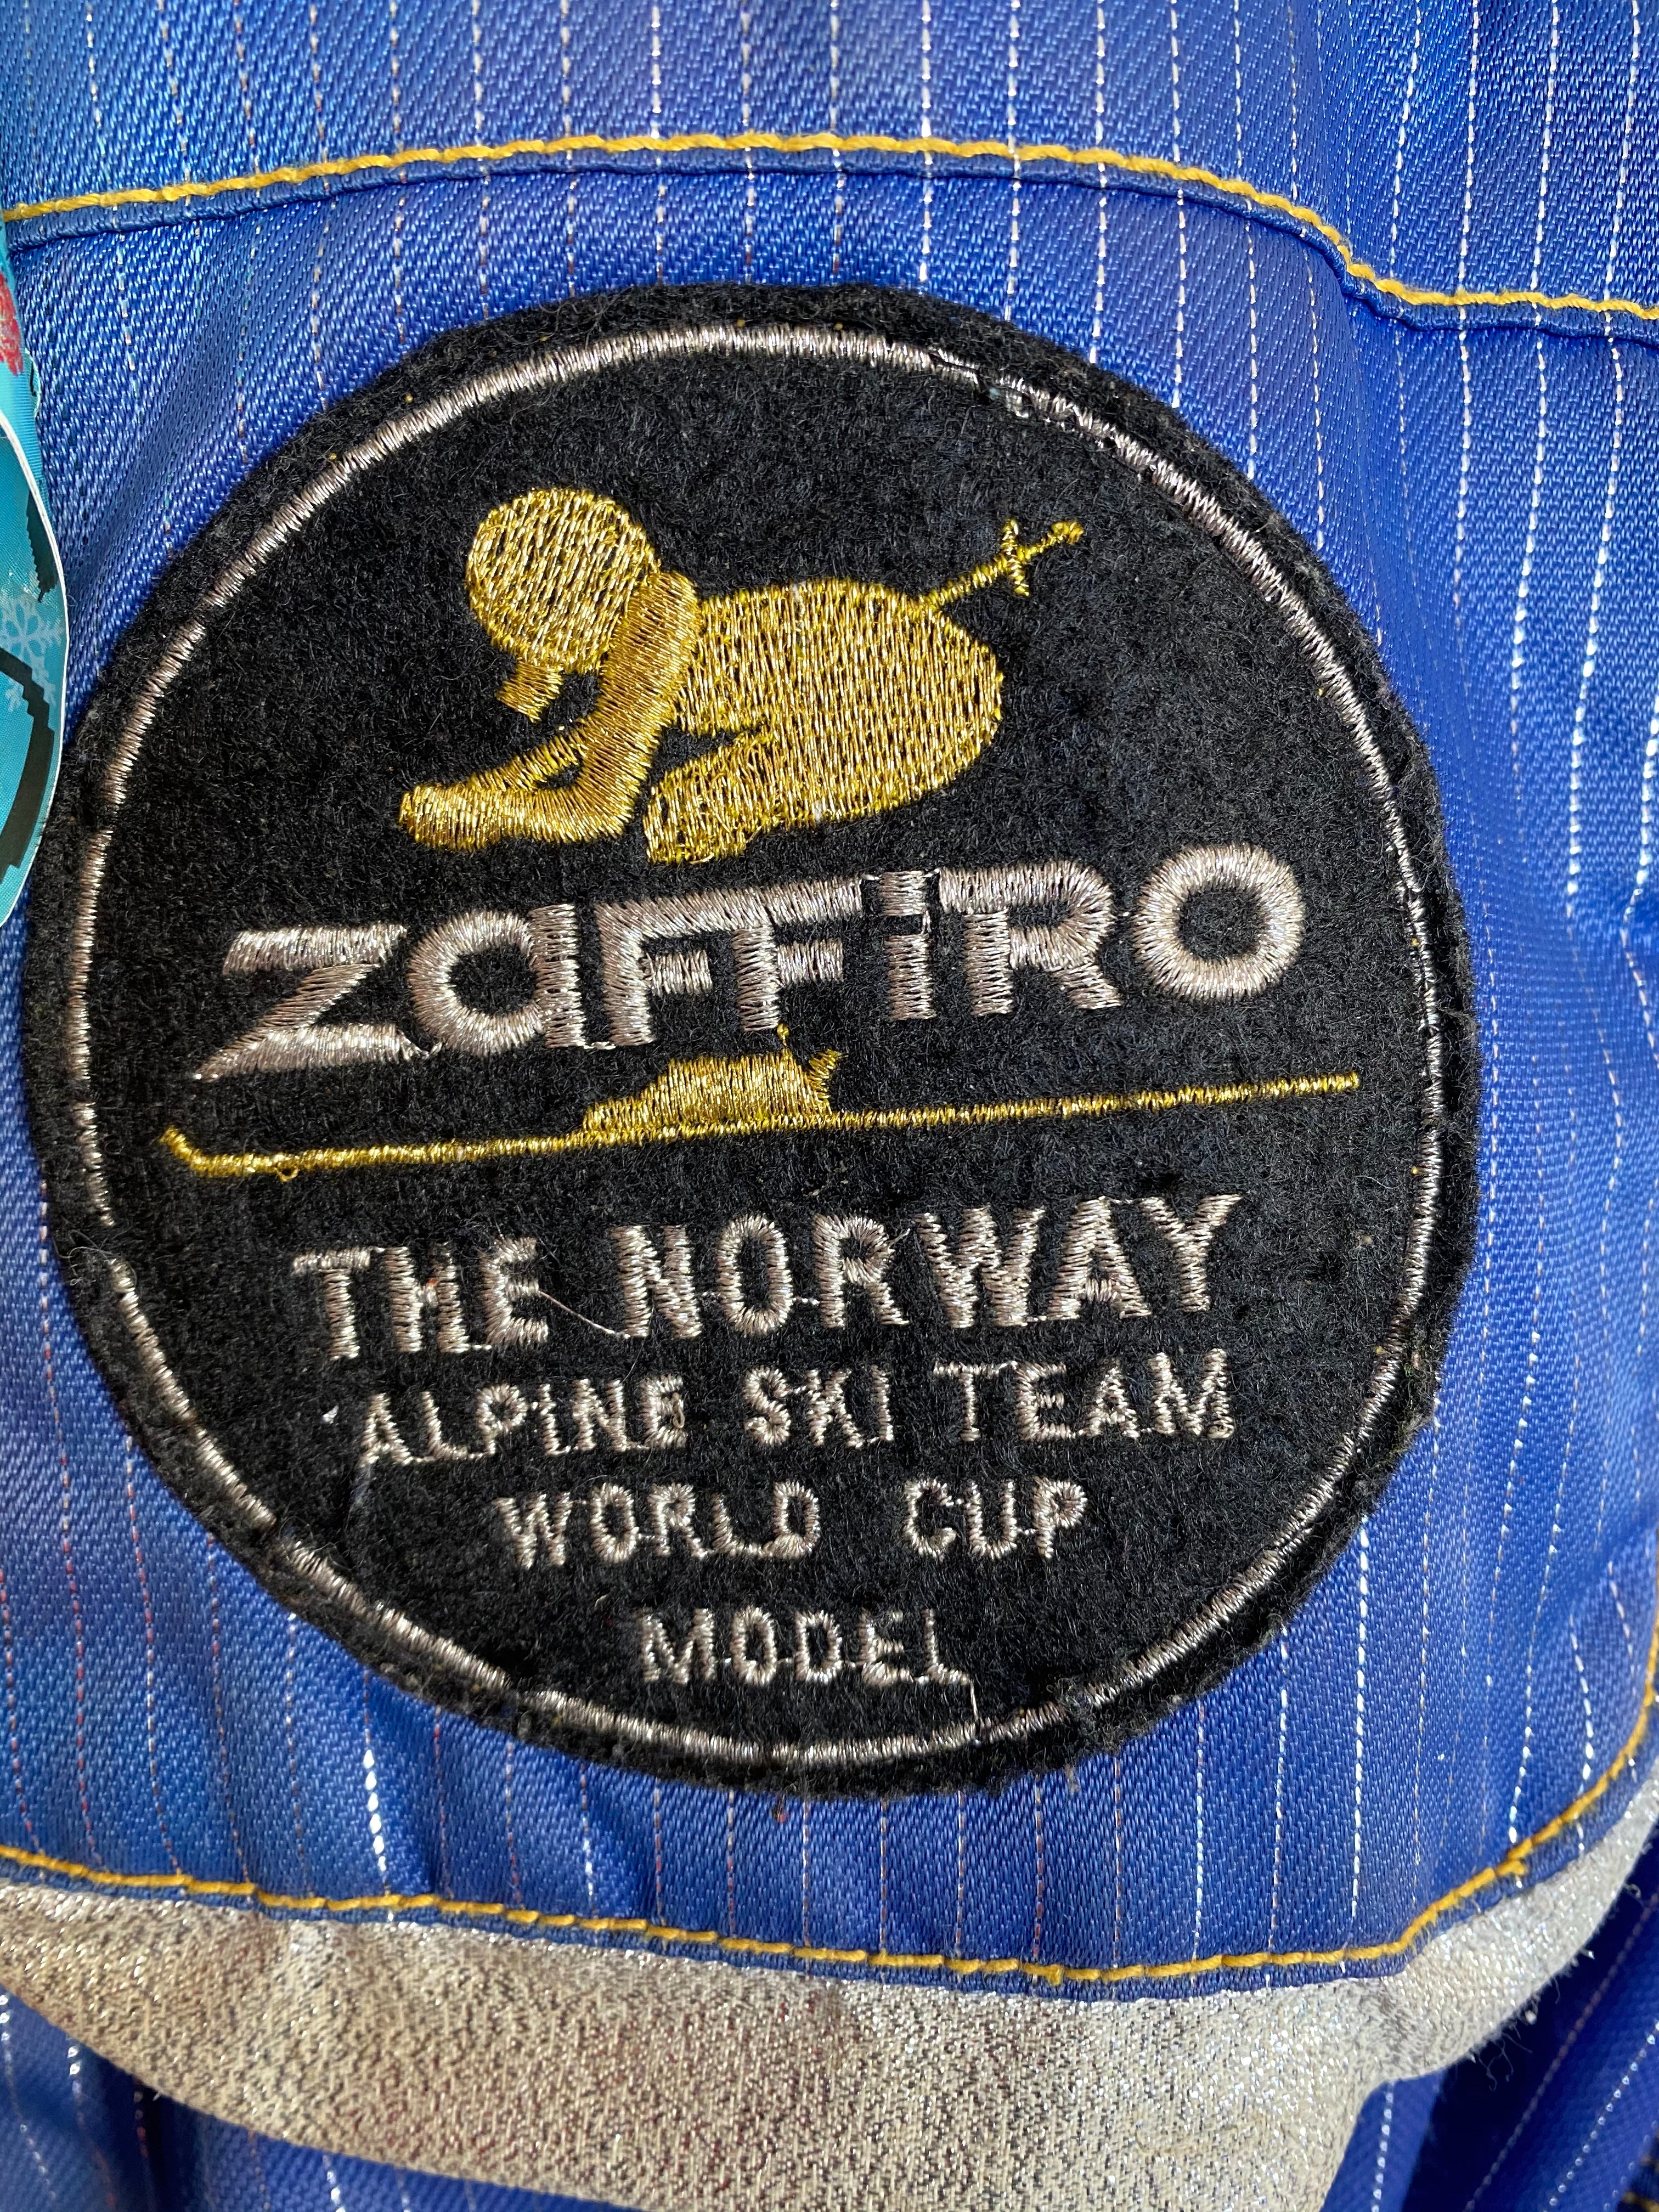 Vintage Zaffiro Blue, Silver, Gold & Fluorescent Yellow Jacket: patch on jacket